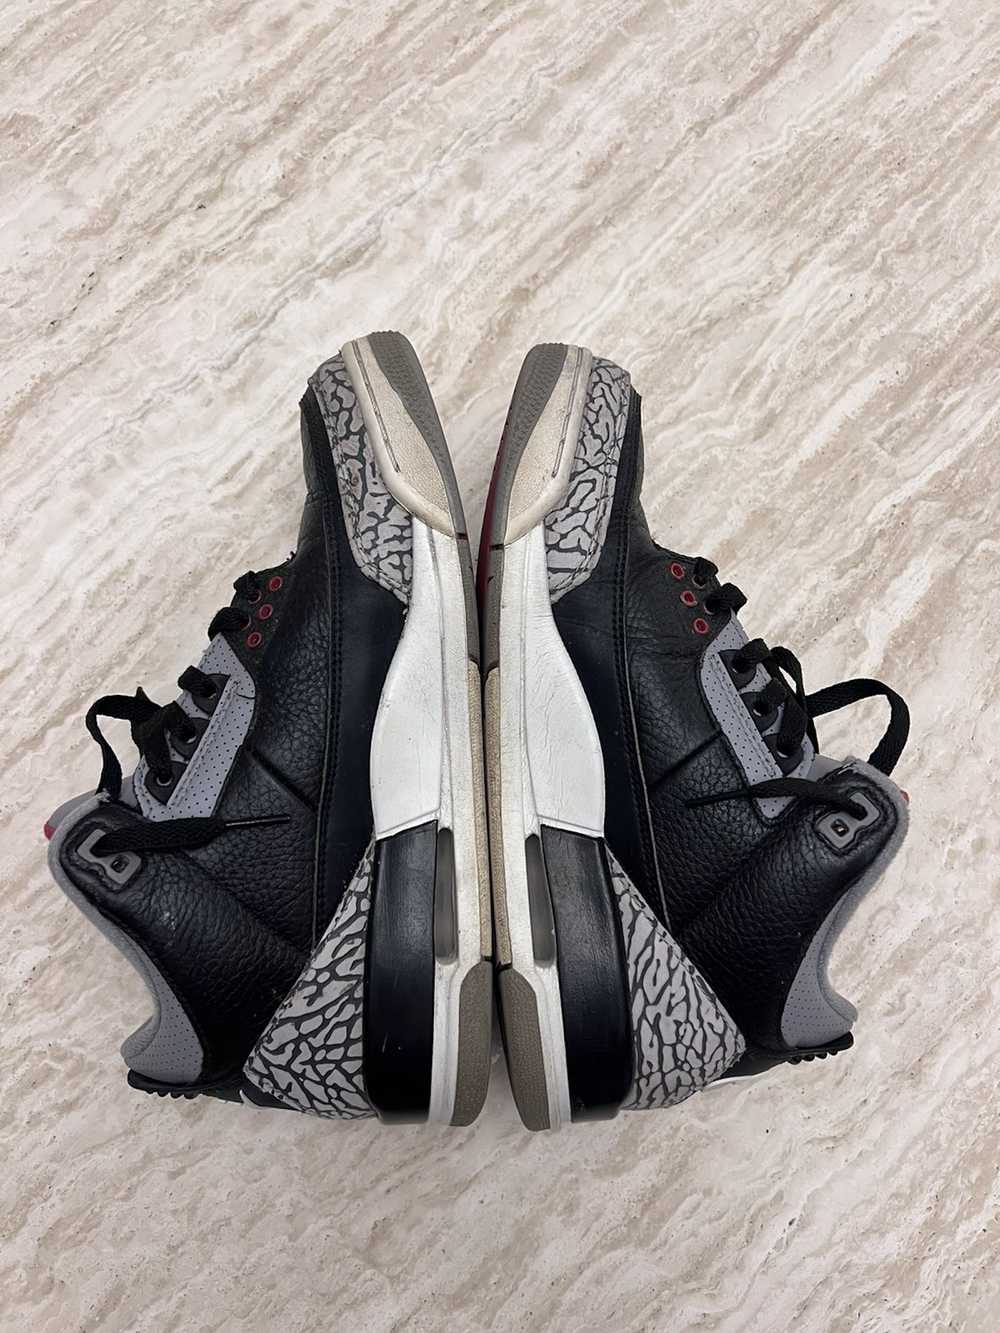 Jordan Brand Black cement 3 - image 7